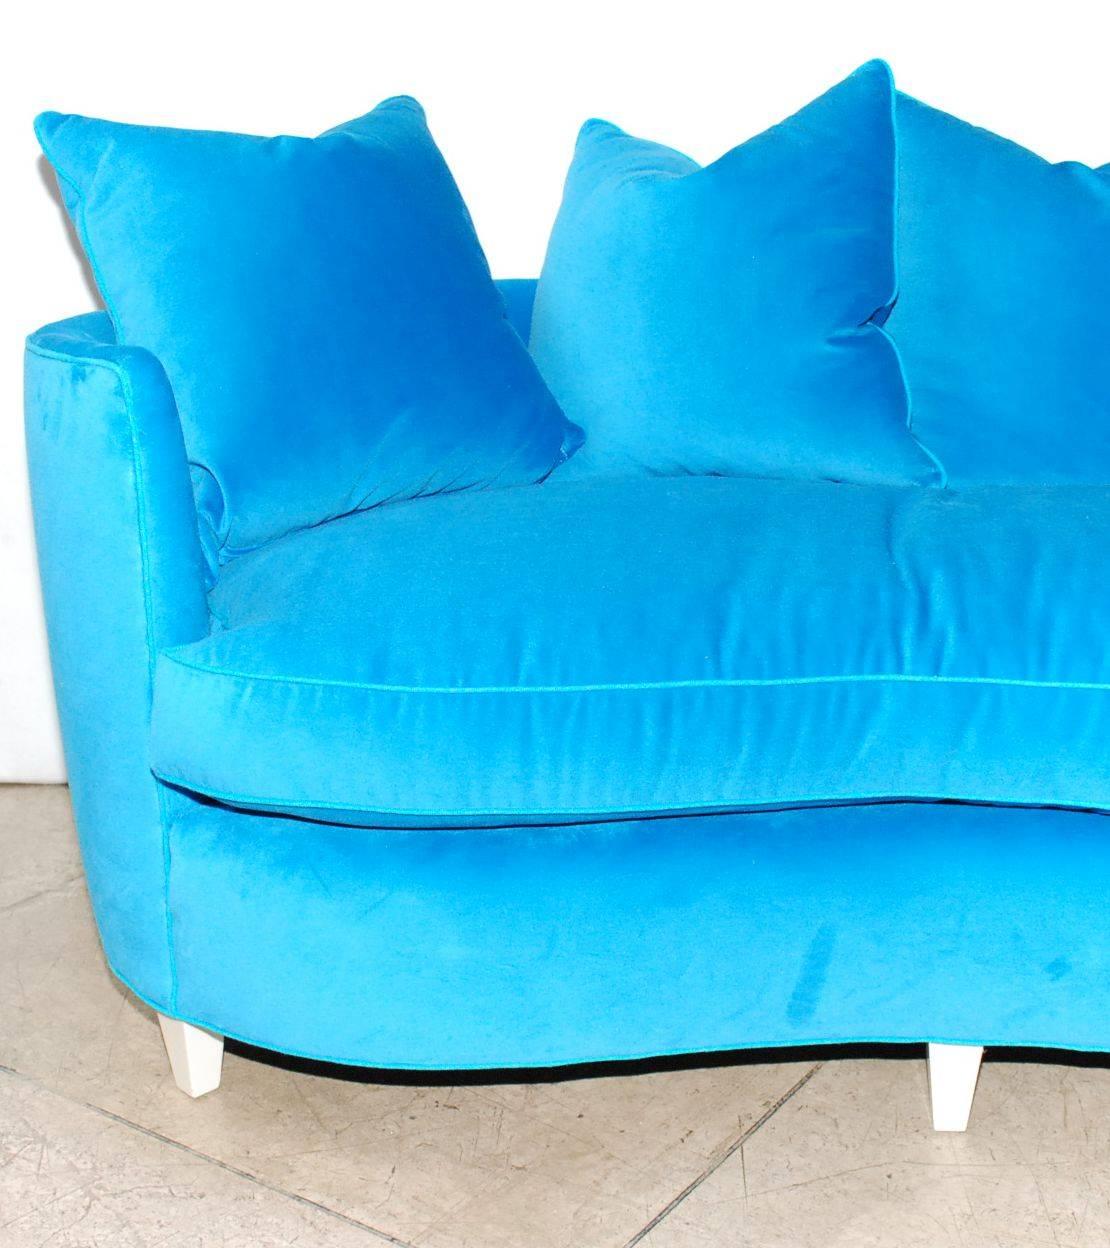 Elegant Henredon sofa newly upholstered with white lacquer legs.